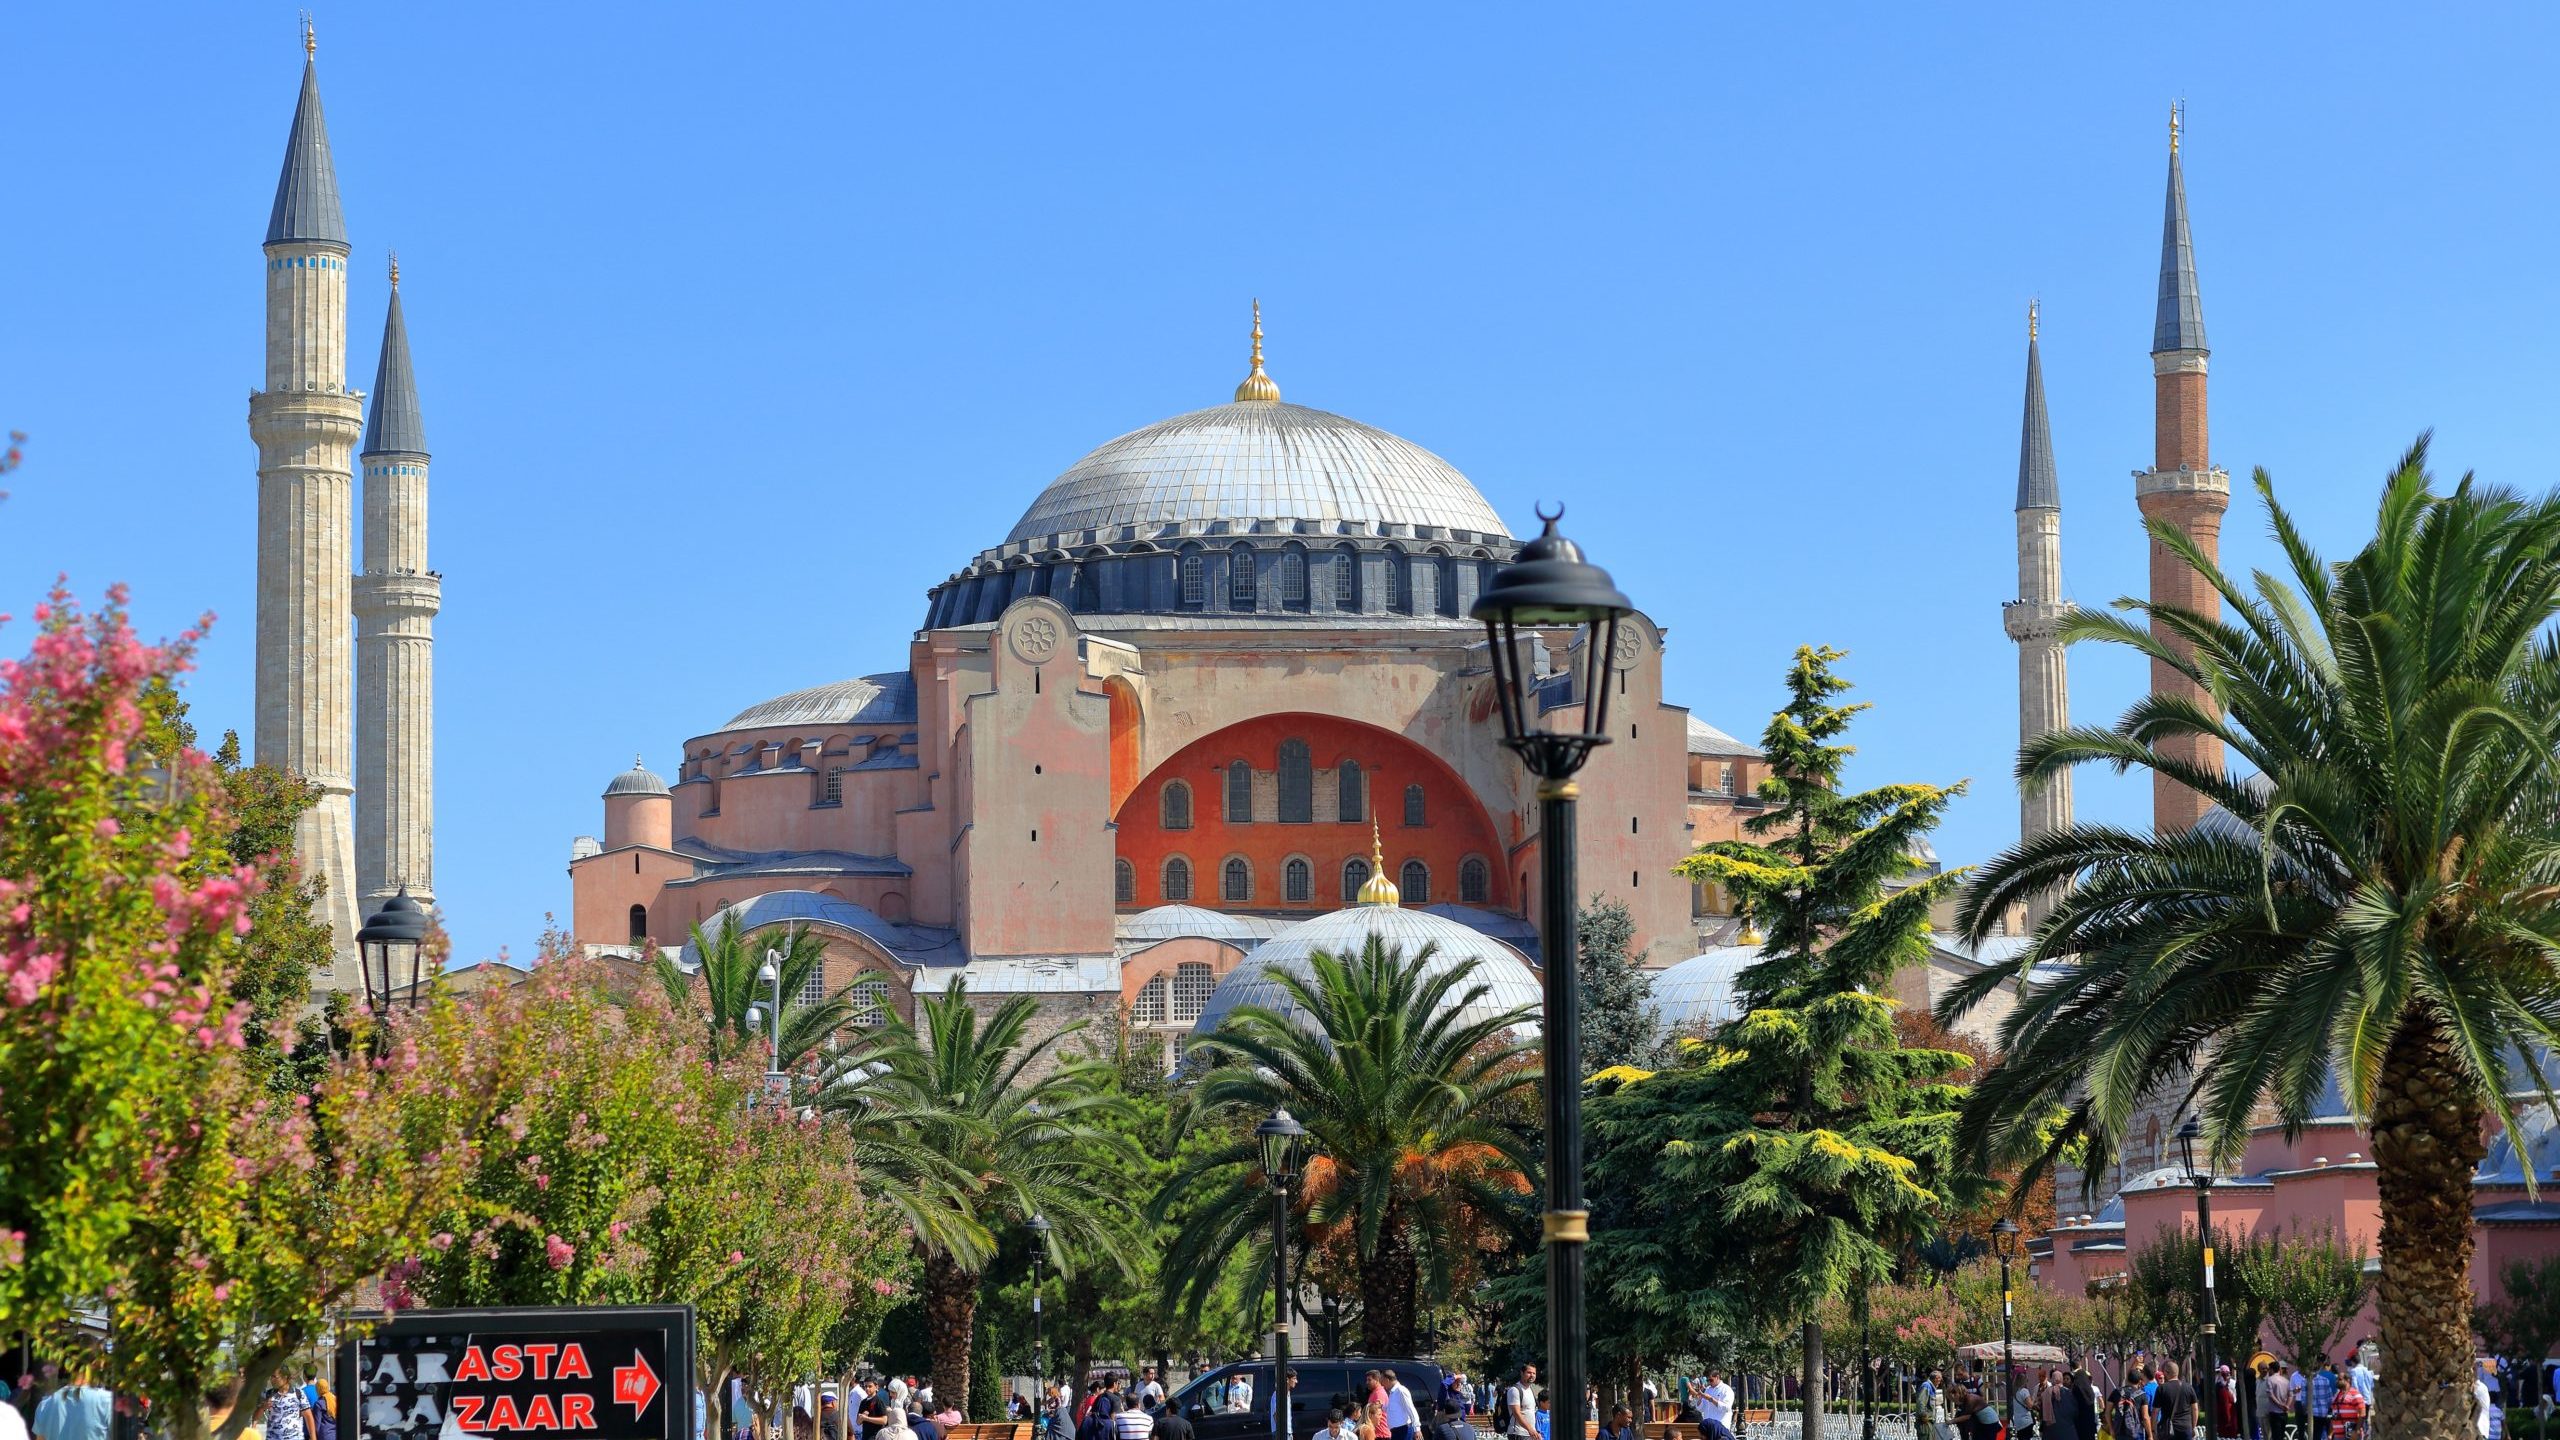 Most Turks Believe Hagia Sophia Debate Politically Driven, Poll Says